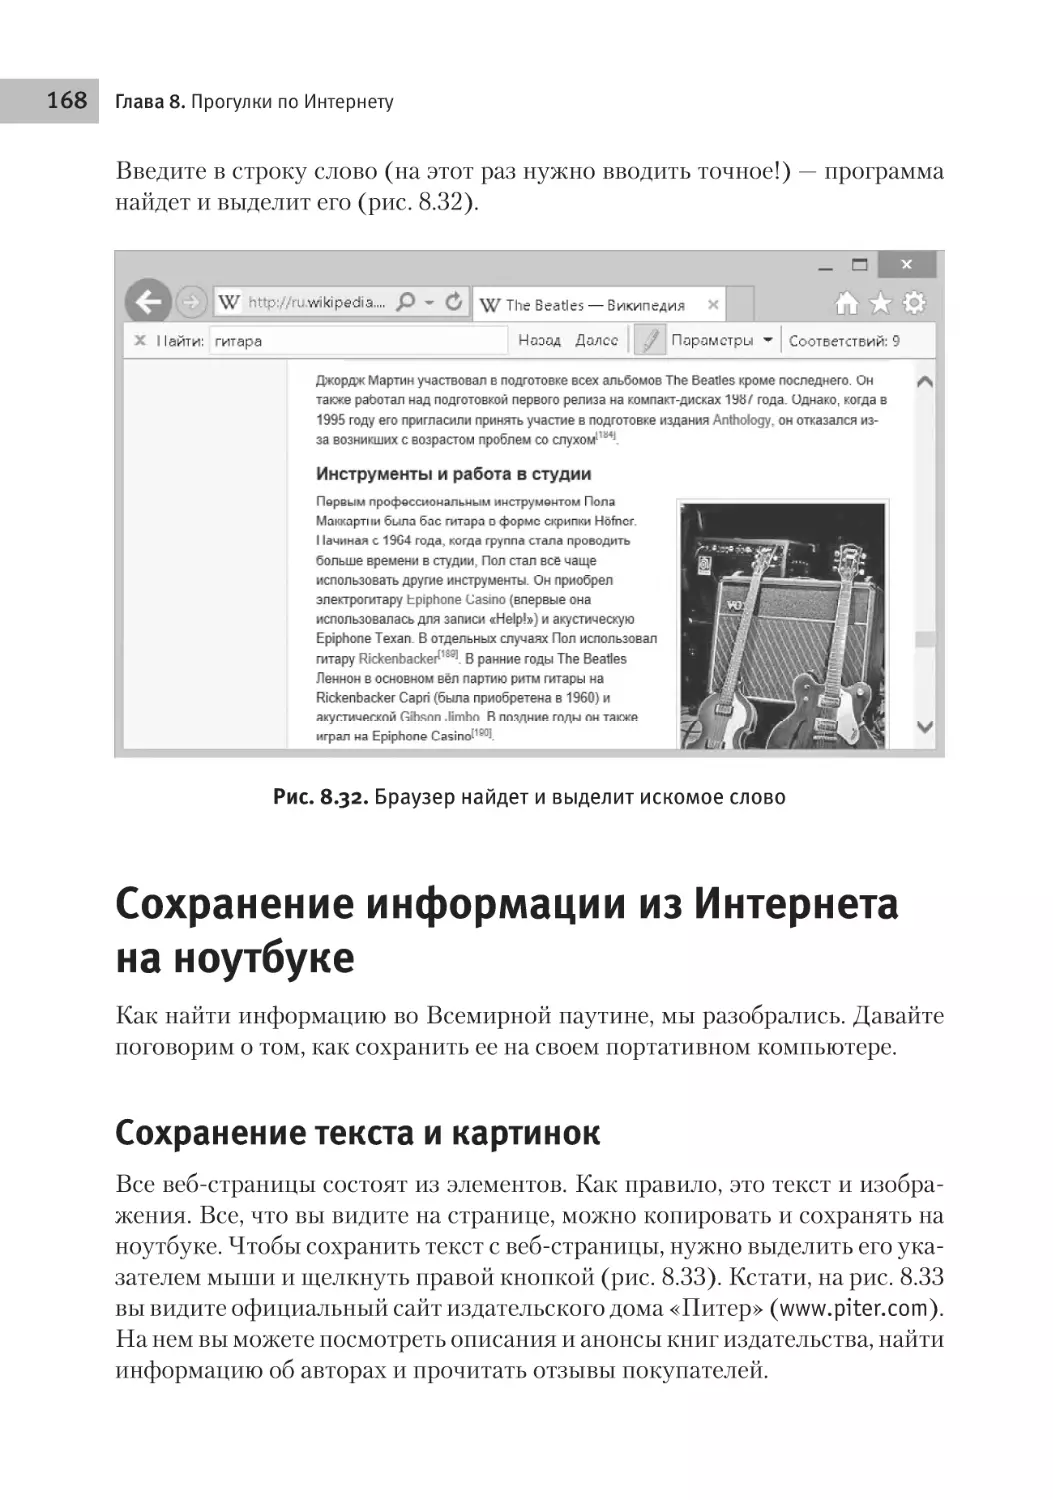 Сохранение информации из Интернета на ноутбуке
Сохранение текста и картинок